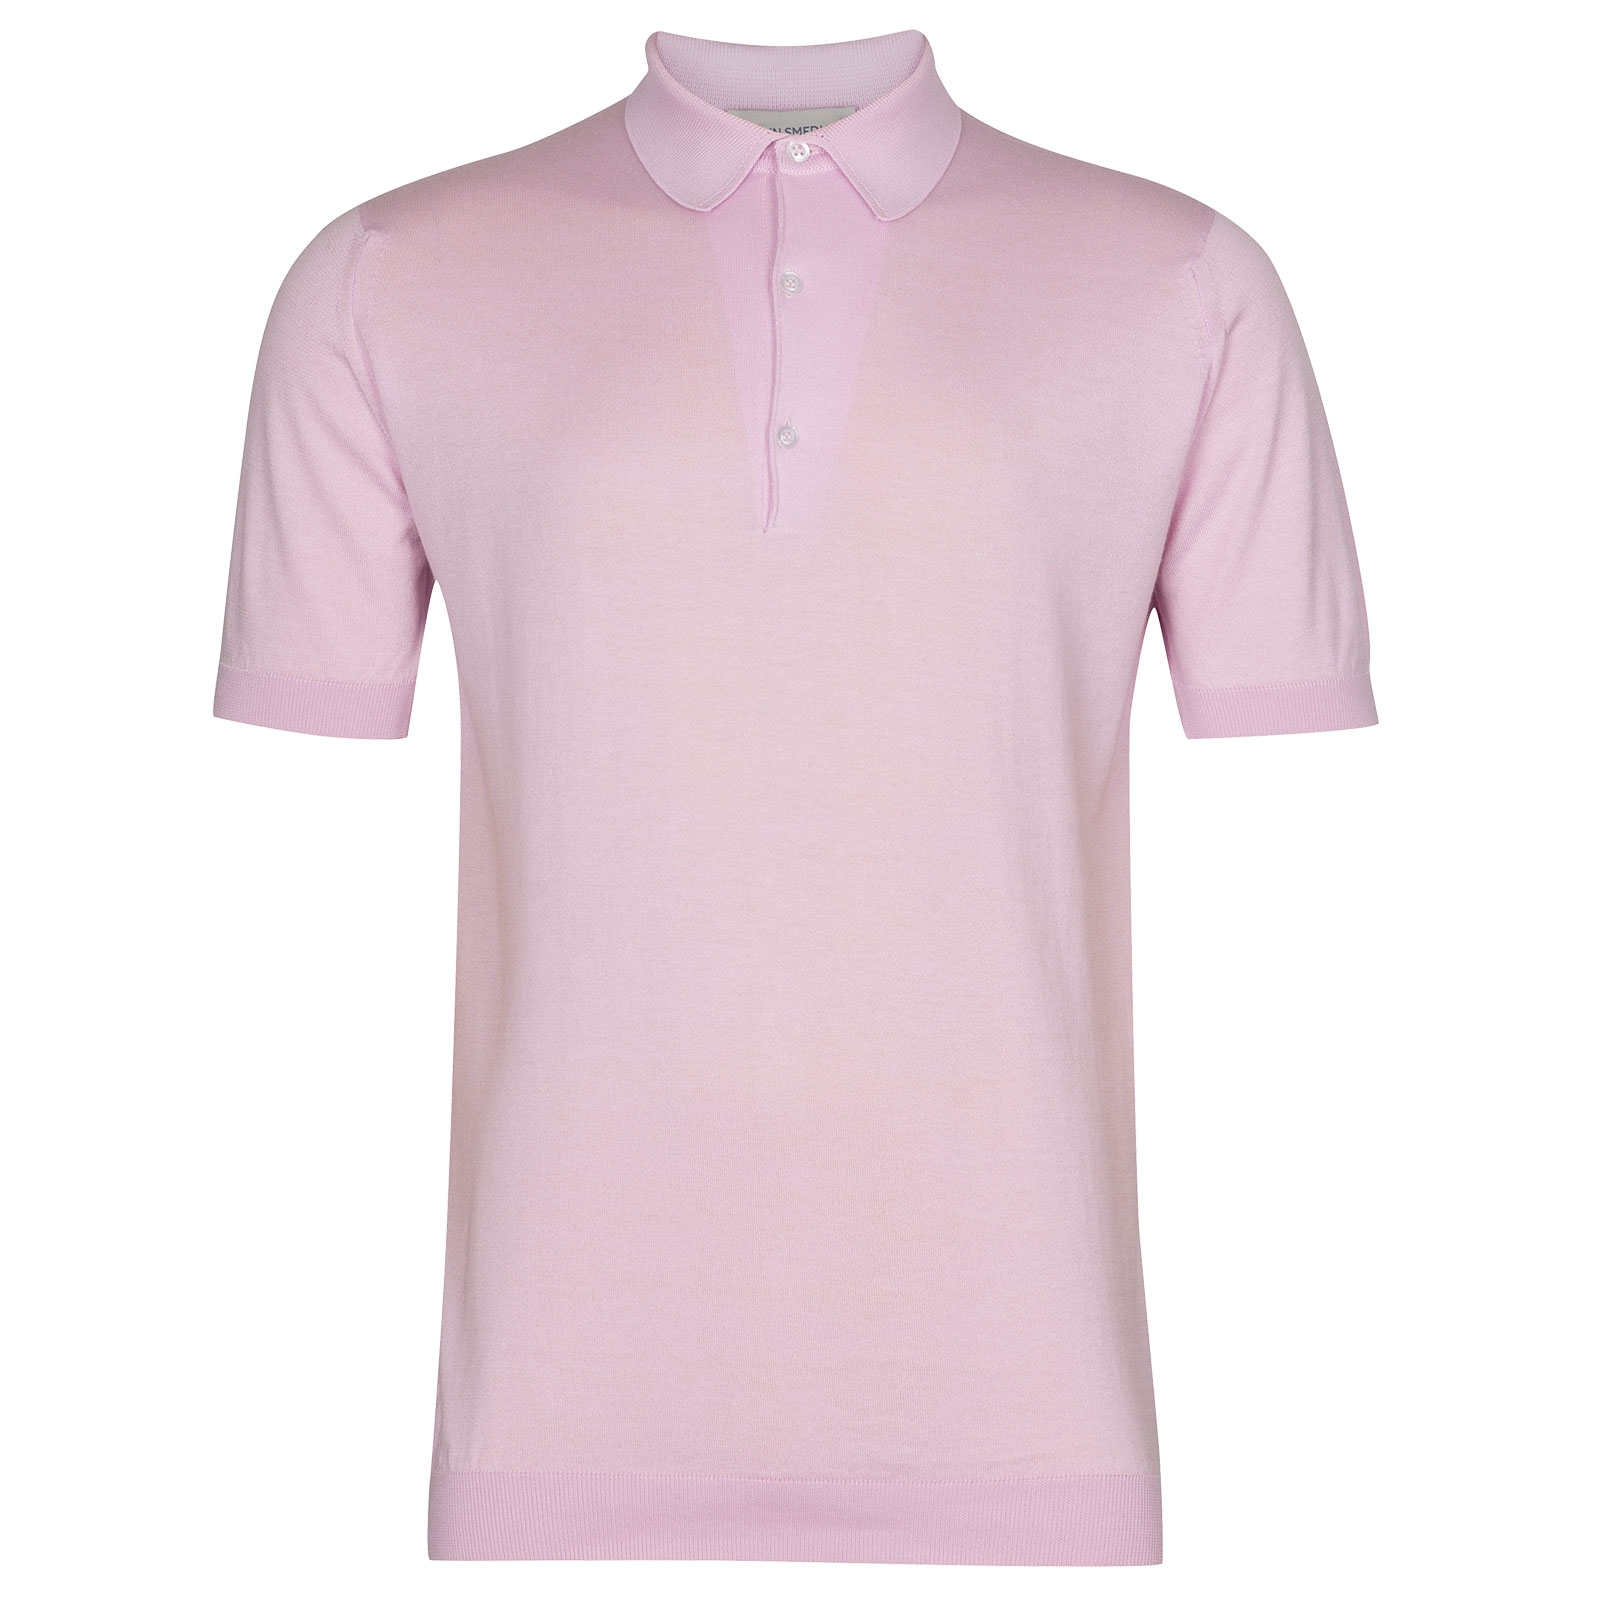 John Smedley Adrian in Pink Blossom Shirt-SML